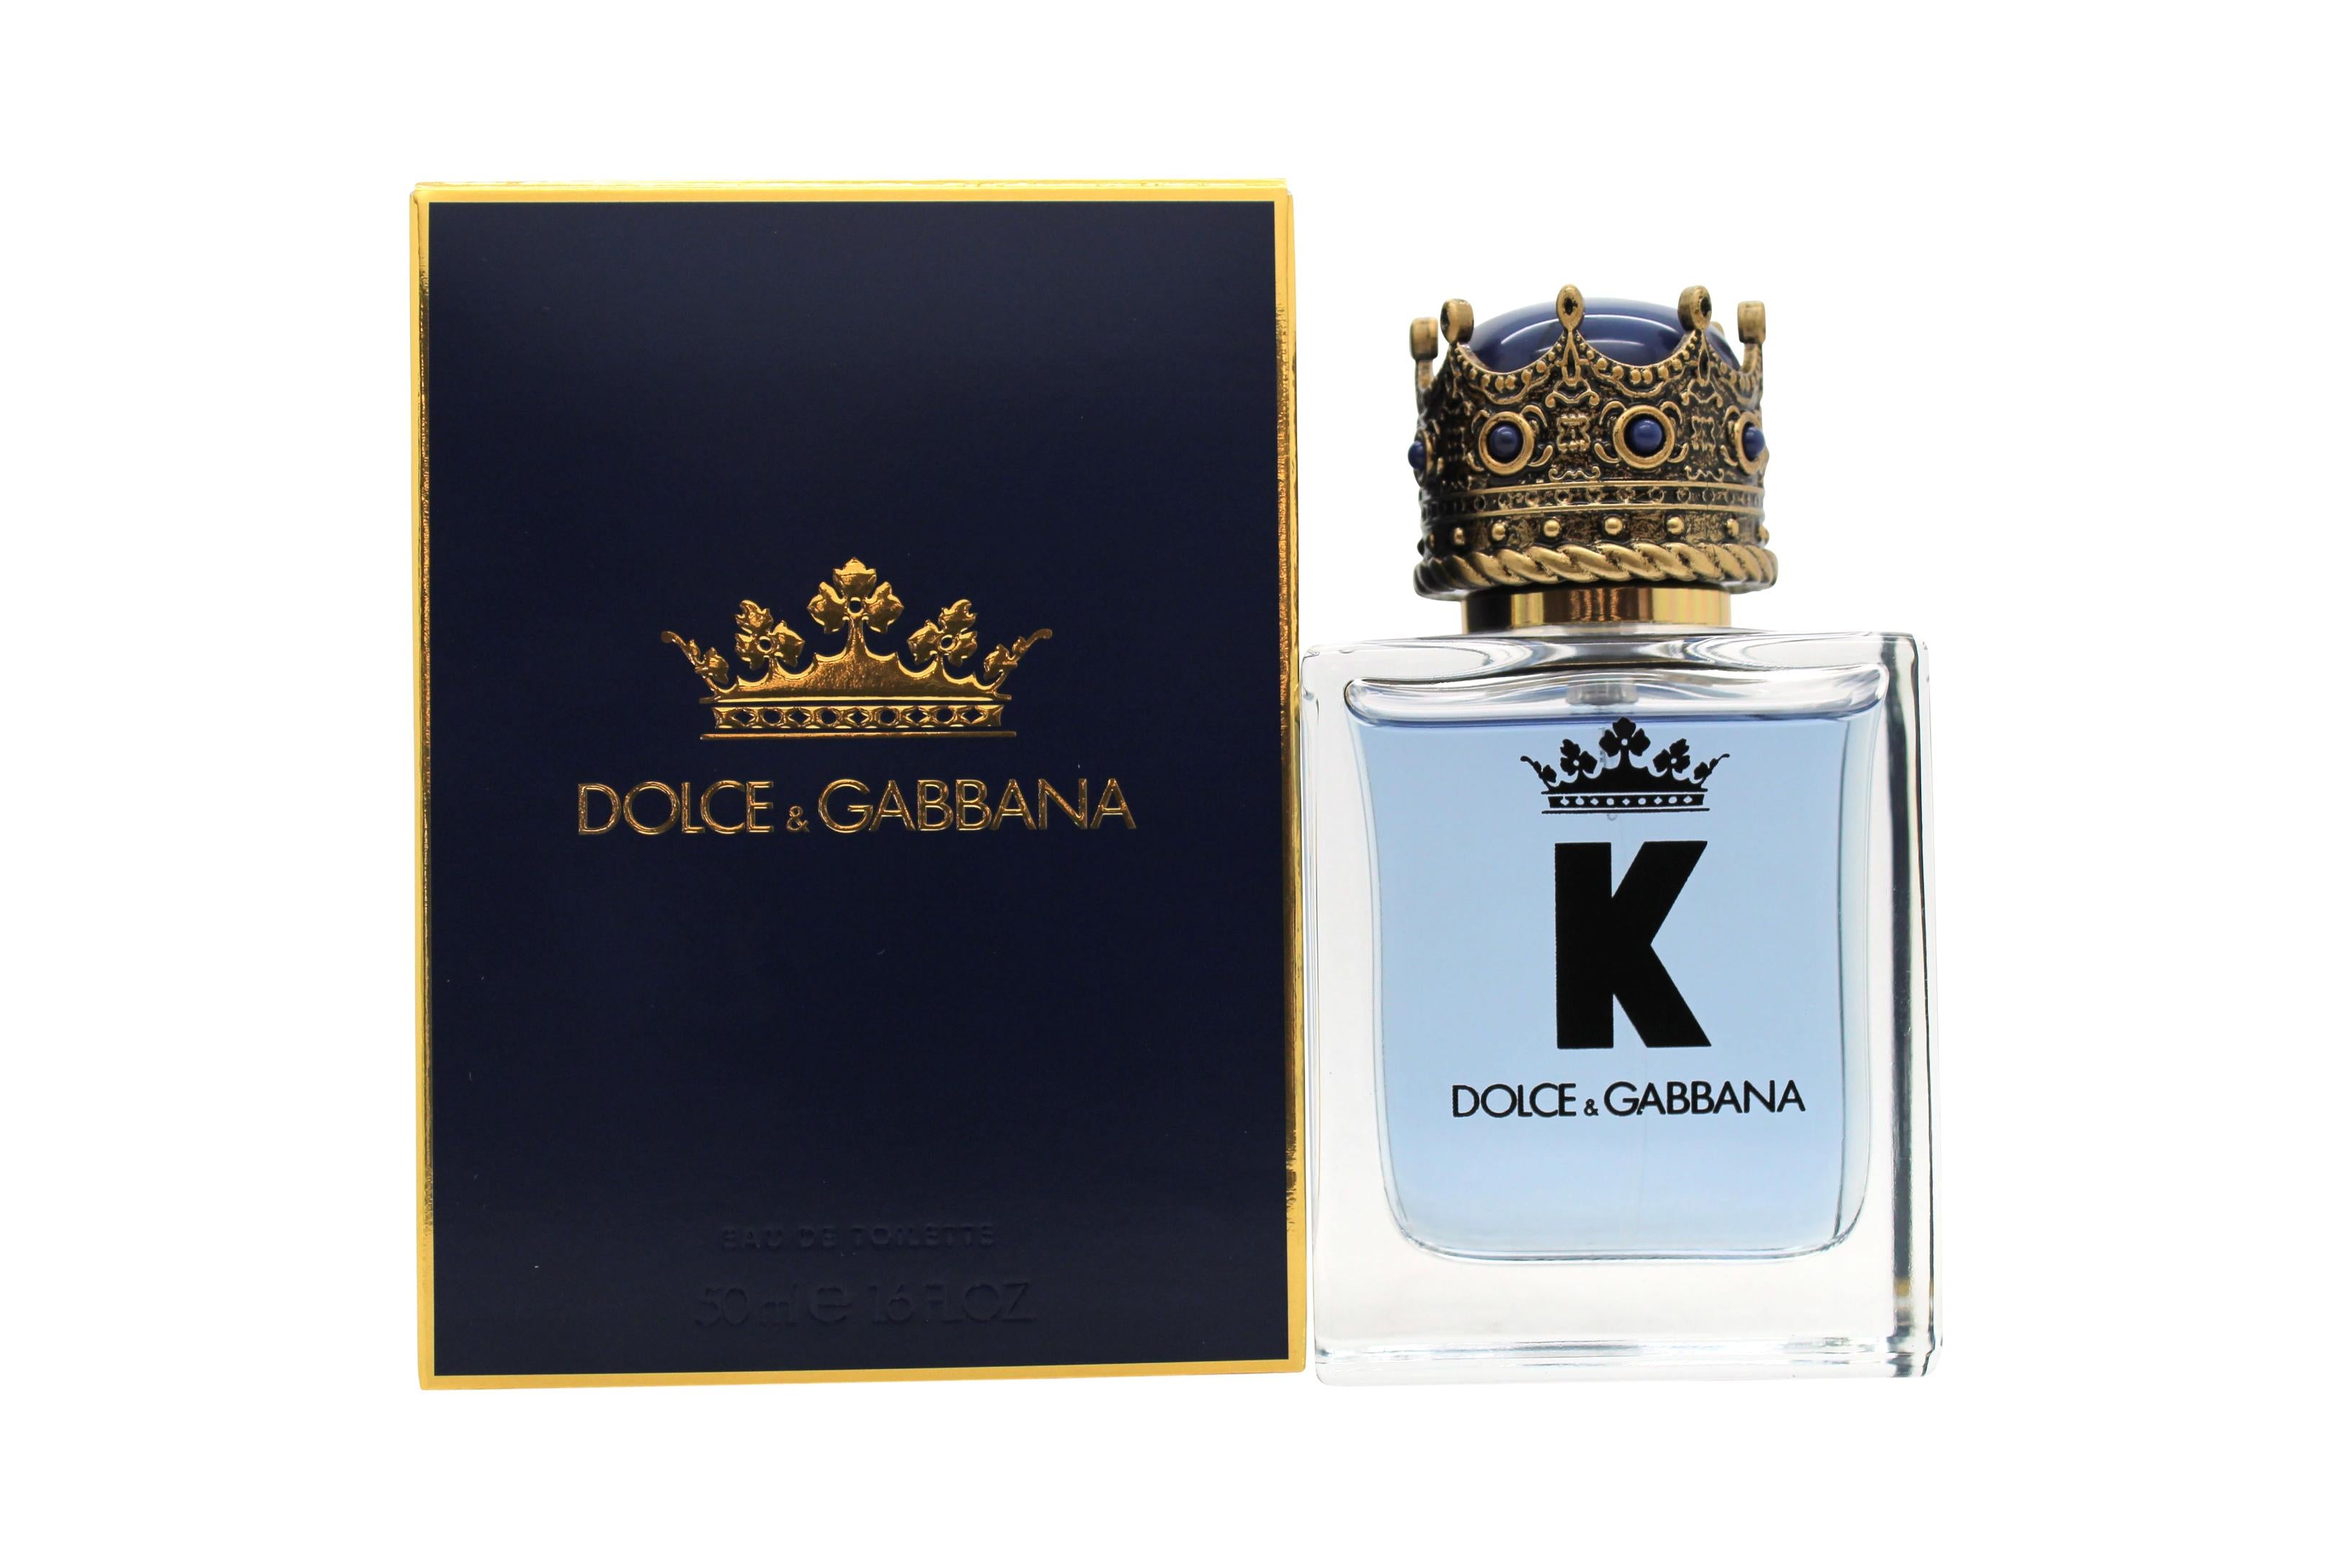 View Dolce Gabbana K Eau de Toilette 50ml Spray information